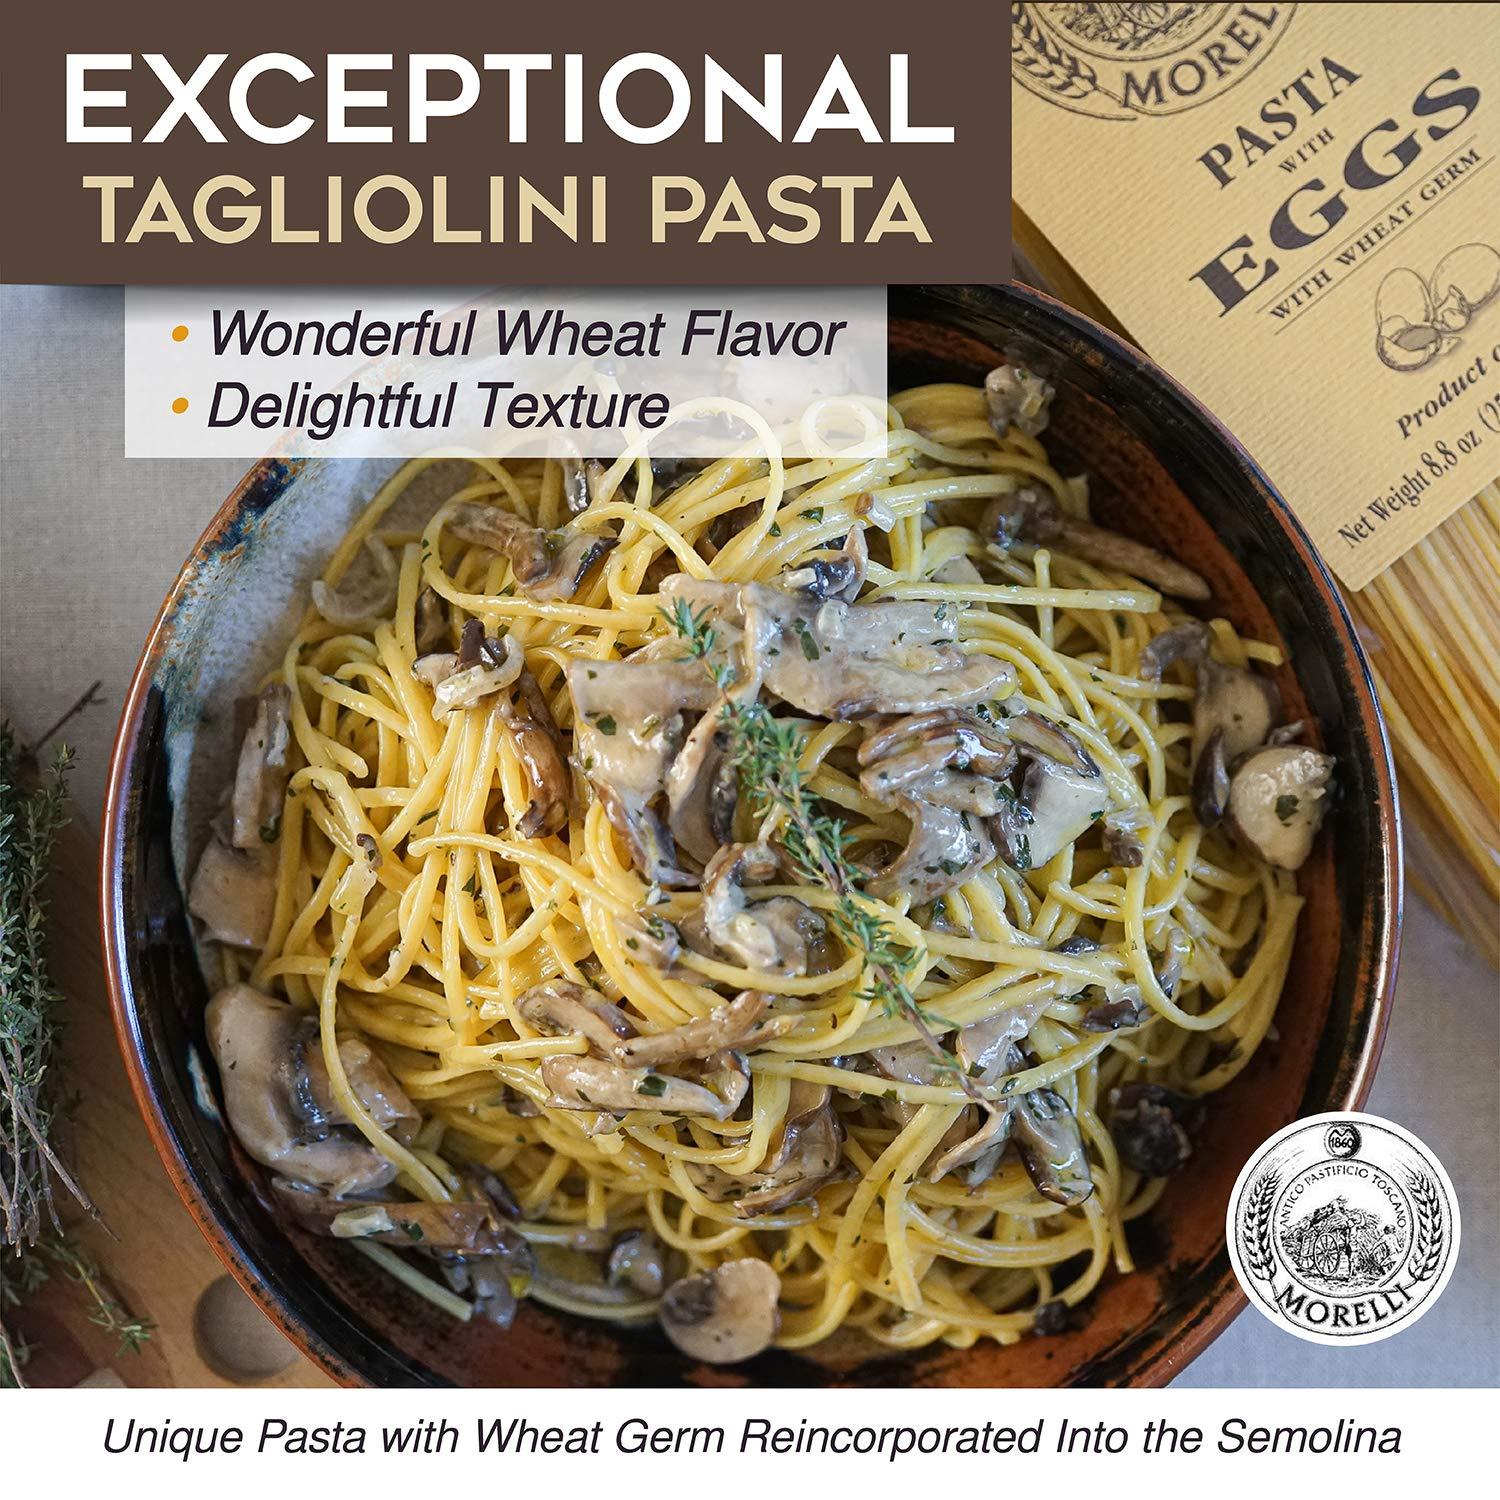 Morelli Pasta Egg Tagliolini Italian Pasta -Gourmet Pasta - Handmade in  Small Batches - Imported Italian Pasta Noodles - Durum Wheat Semolina Pasta  - 8.8 Oz / 250gr (Pack of 2) 8.8 Ounce (Pack of 2)